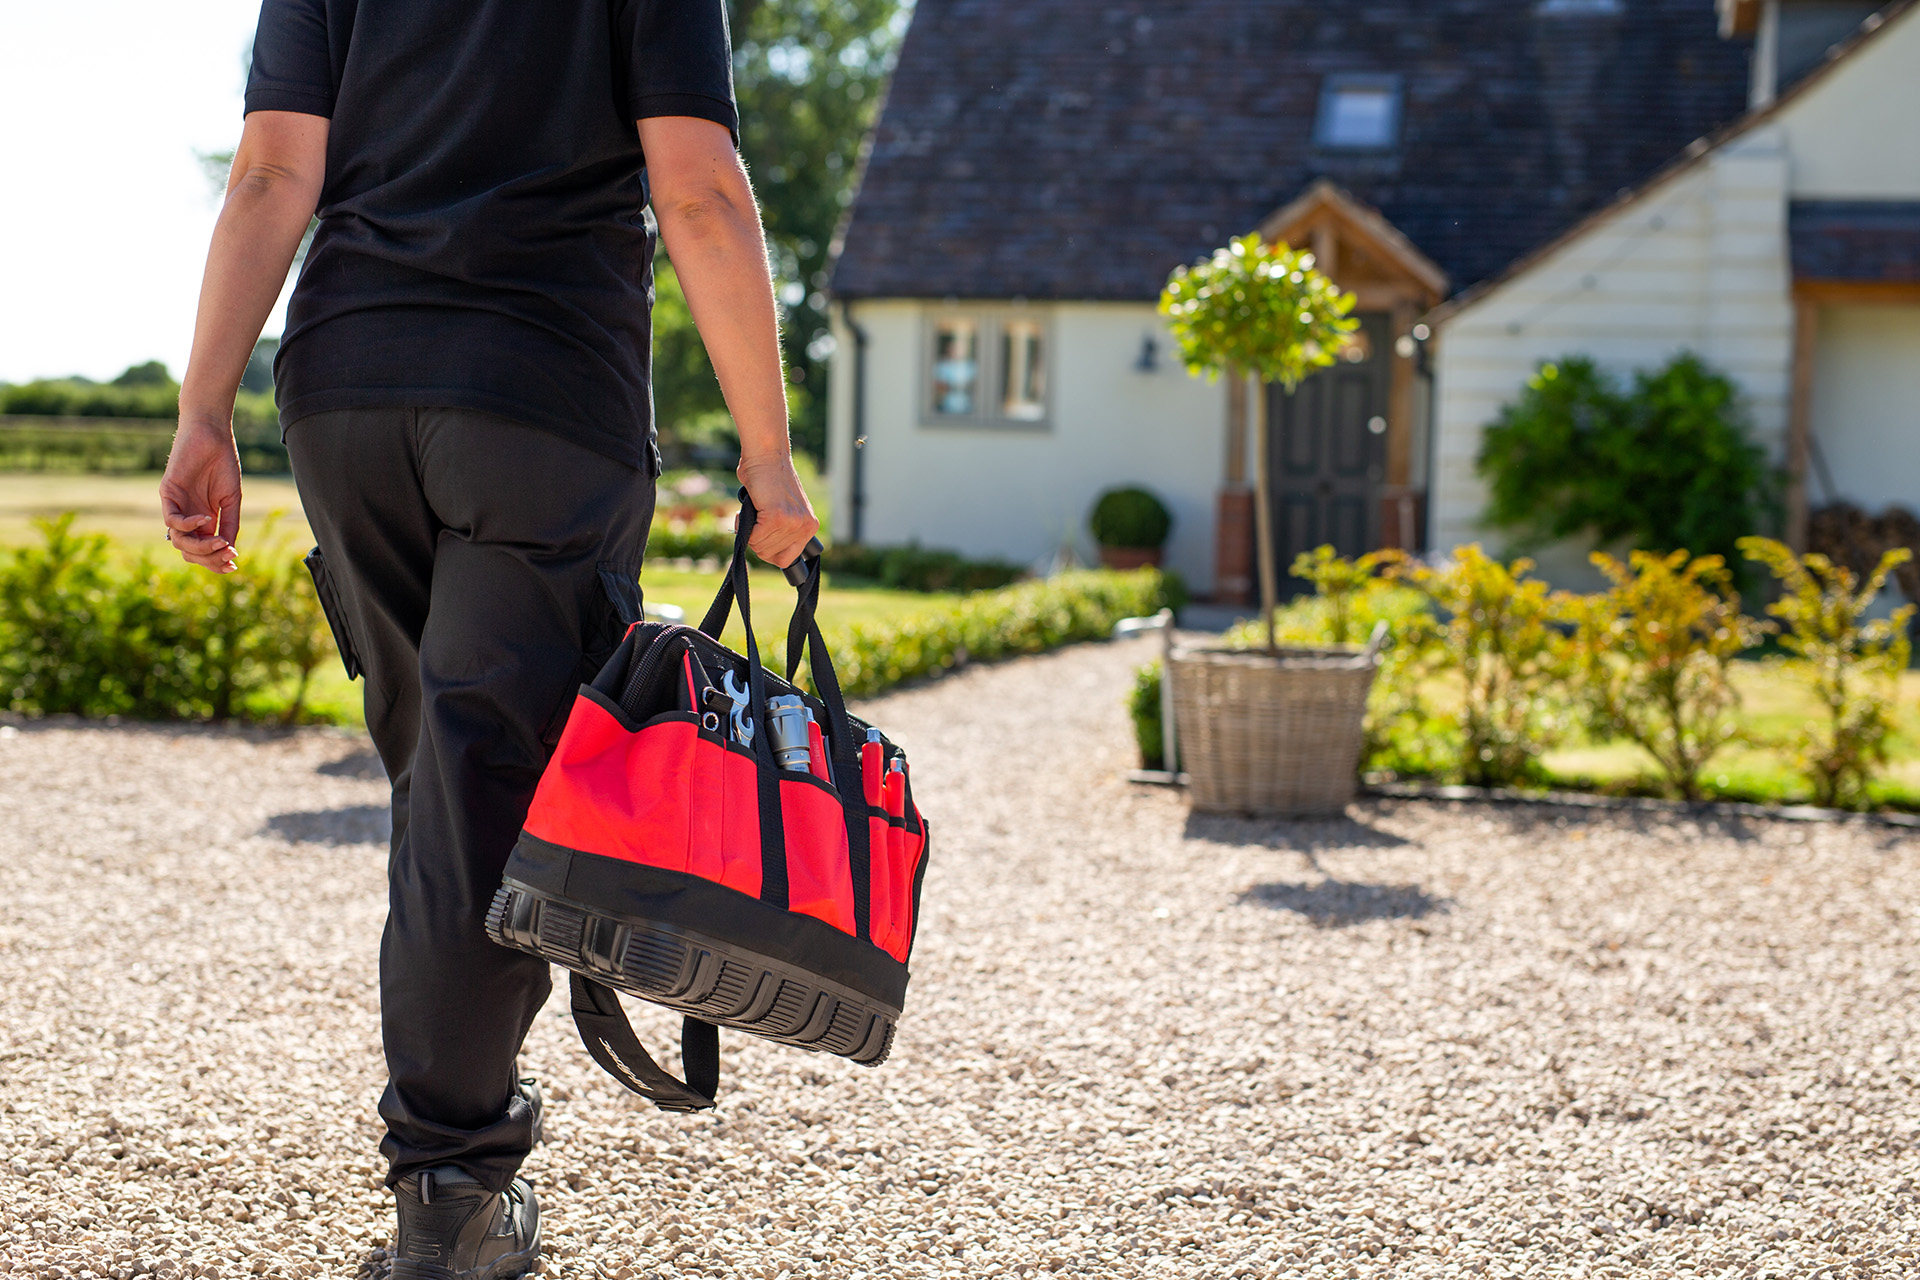 A Calor employee holding a tool bag and walking towards a Calor customer’s house